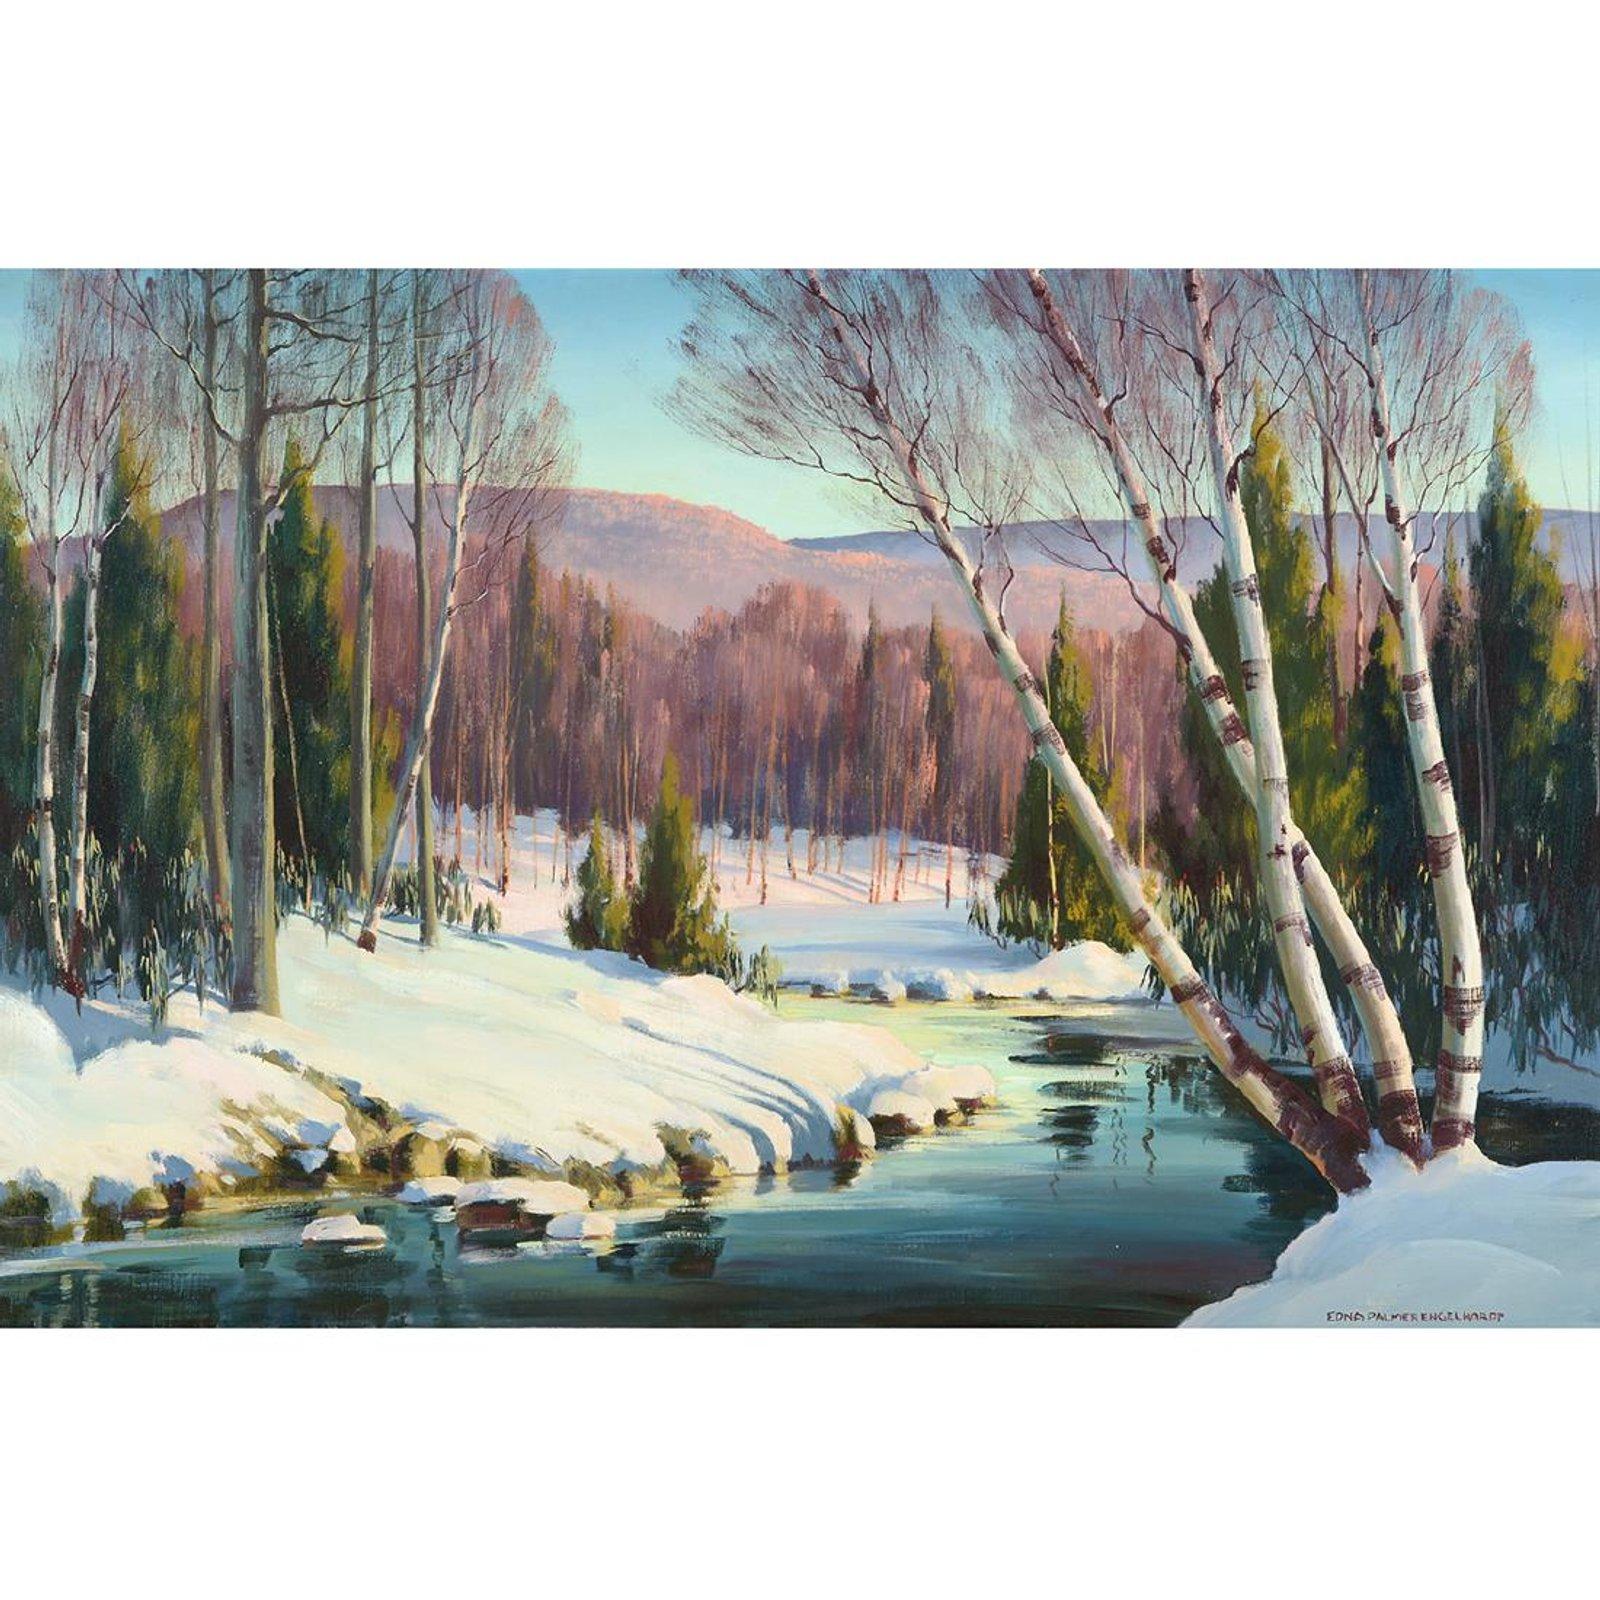 Edna Palmer Engelhardt Landscape Painting - “The Warm March Sun”